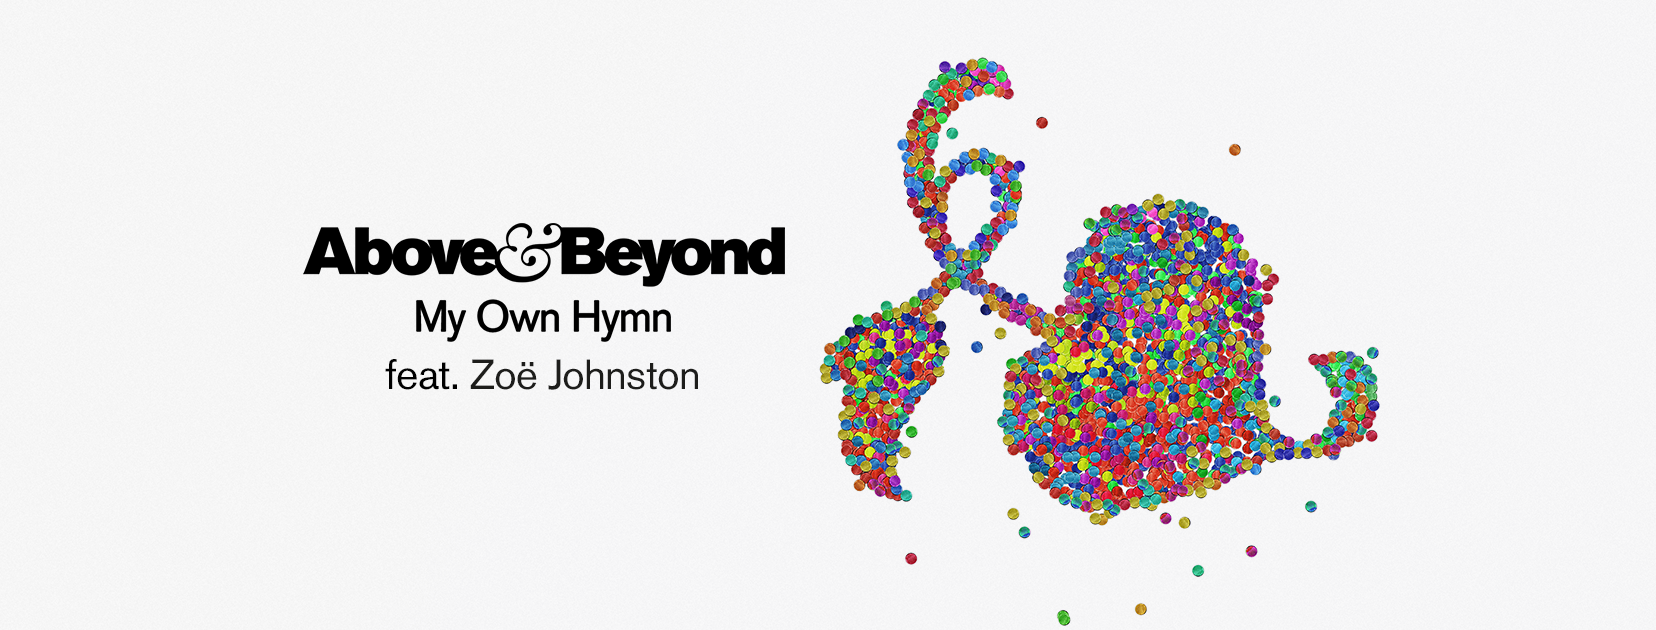 Above & Beyond - "My Own Hymn"